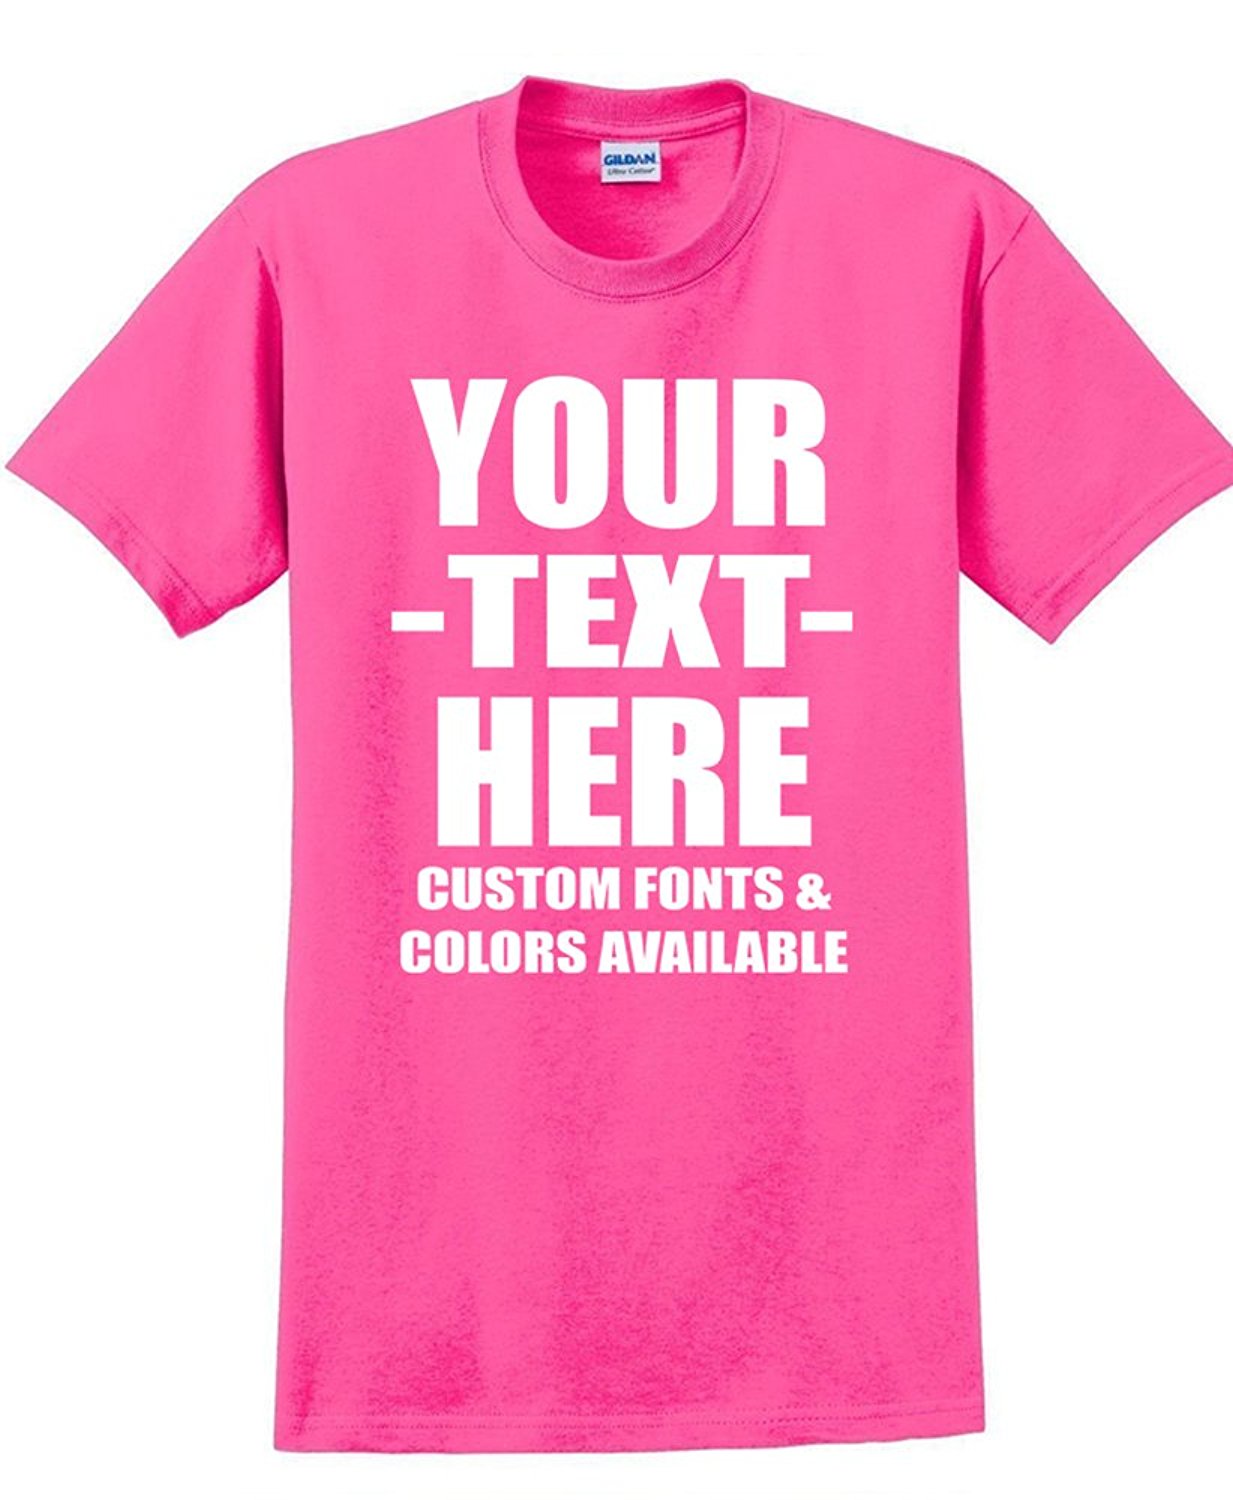 T-Shirts - Custom T-Shirts - Make Your Own Design - Custom City